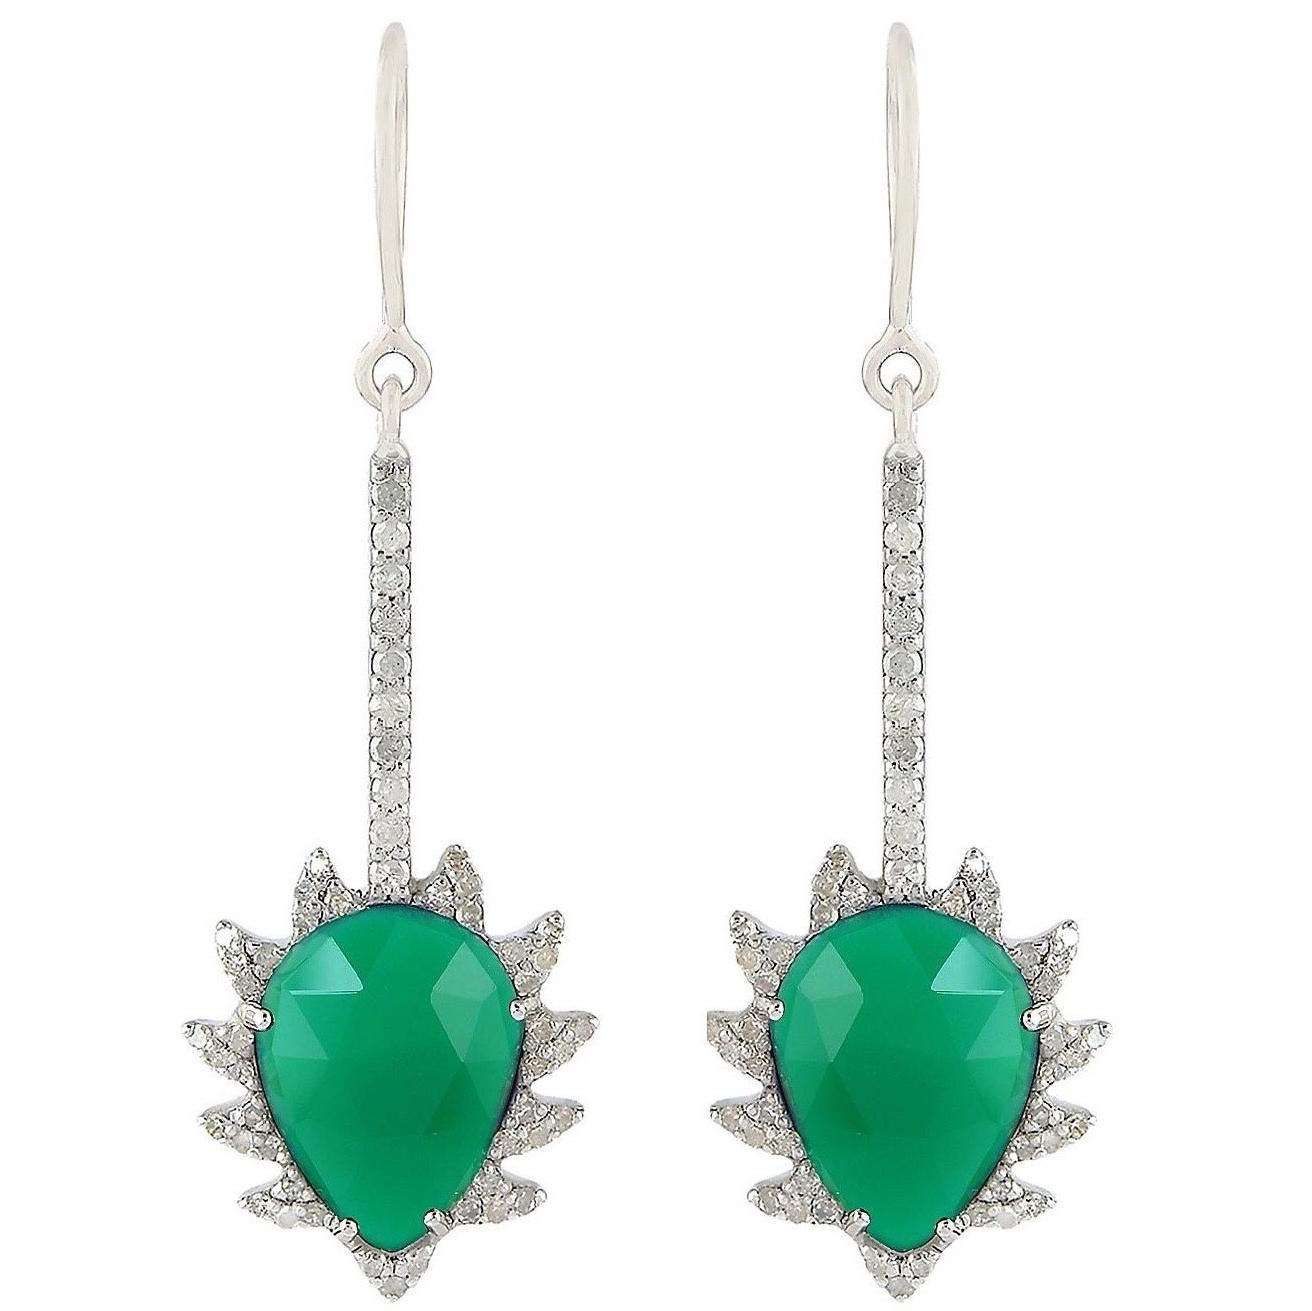  Meghna Jewels Boucles d'oreilles onyx vert et diamants 